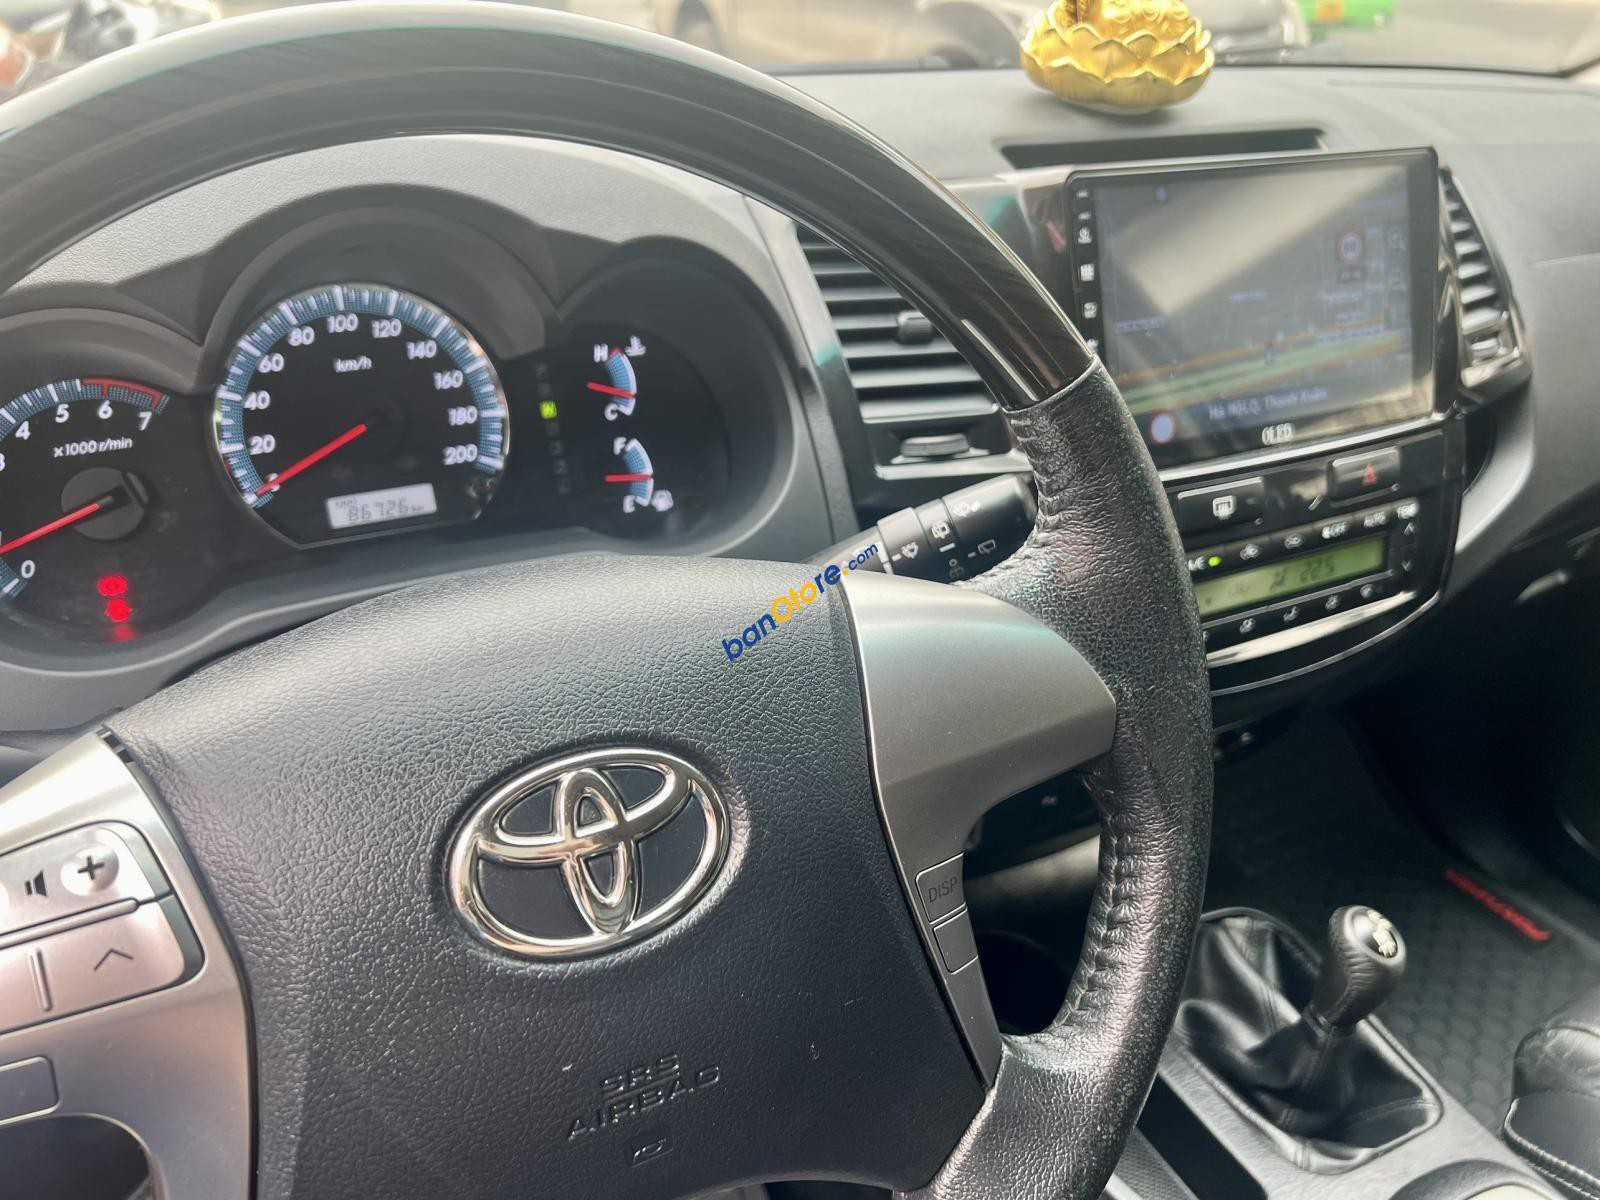 Toyota Fortuner 2015 - Màu bạc, 580tr